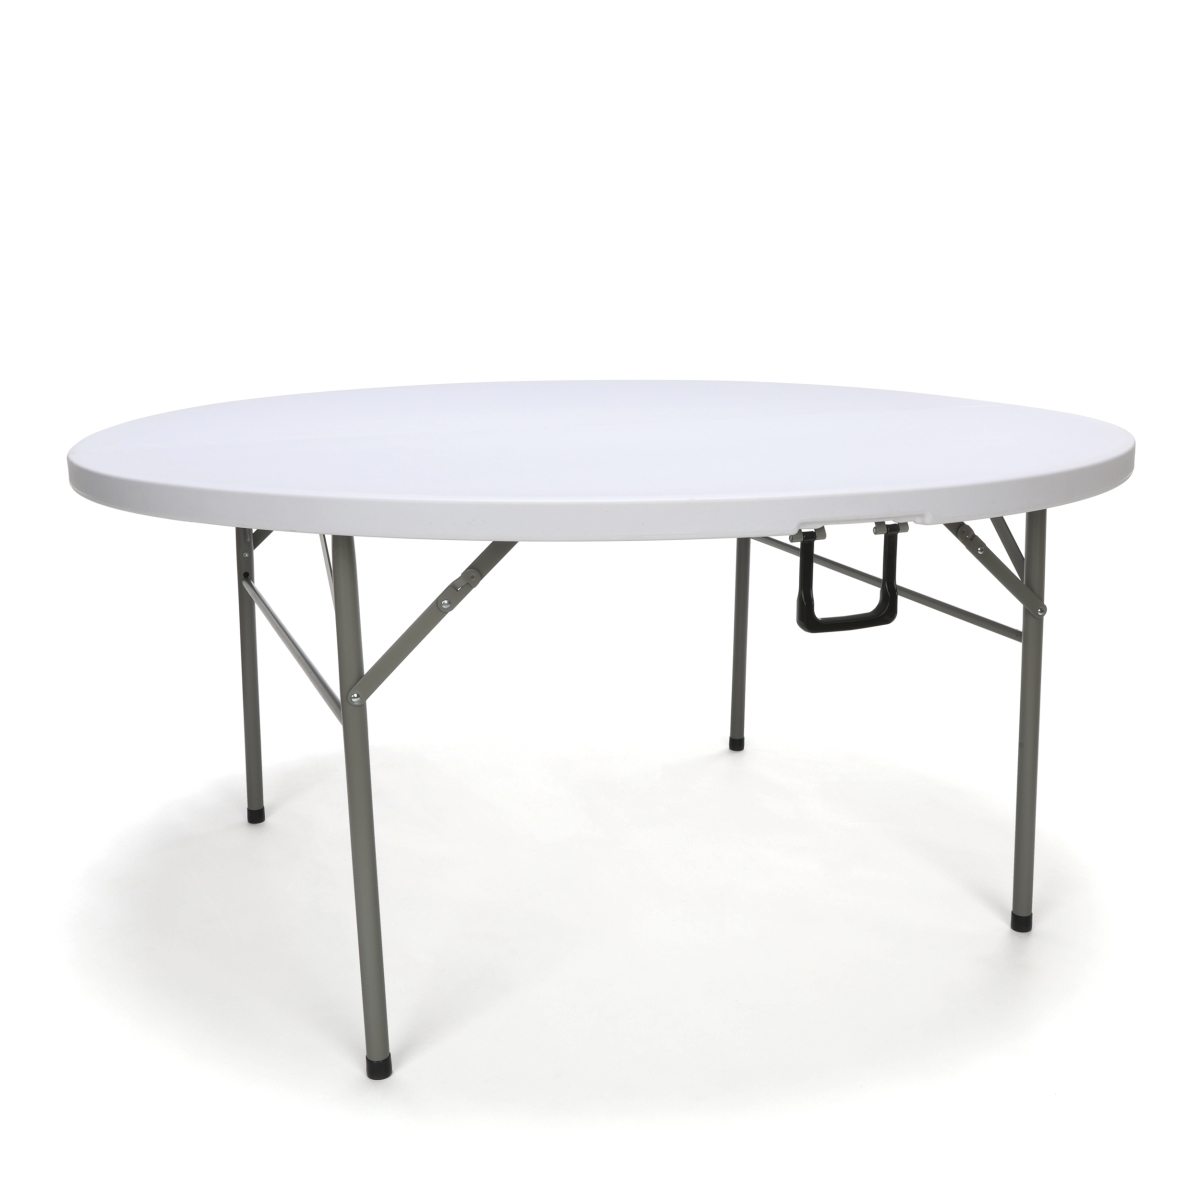 Ess-5060rf-wht 60 In. Round Center-folding Utility Table, White